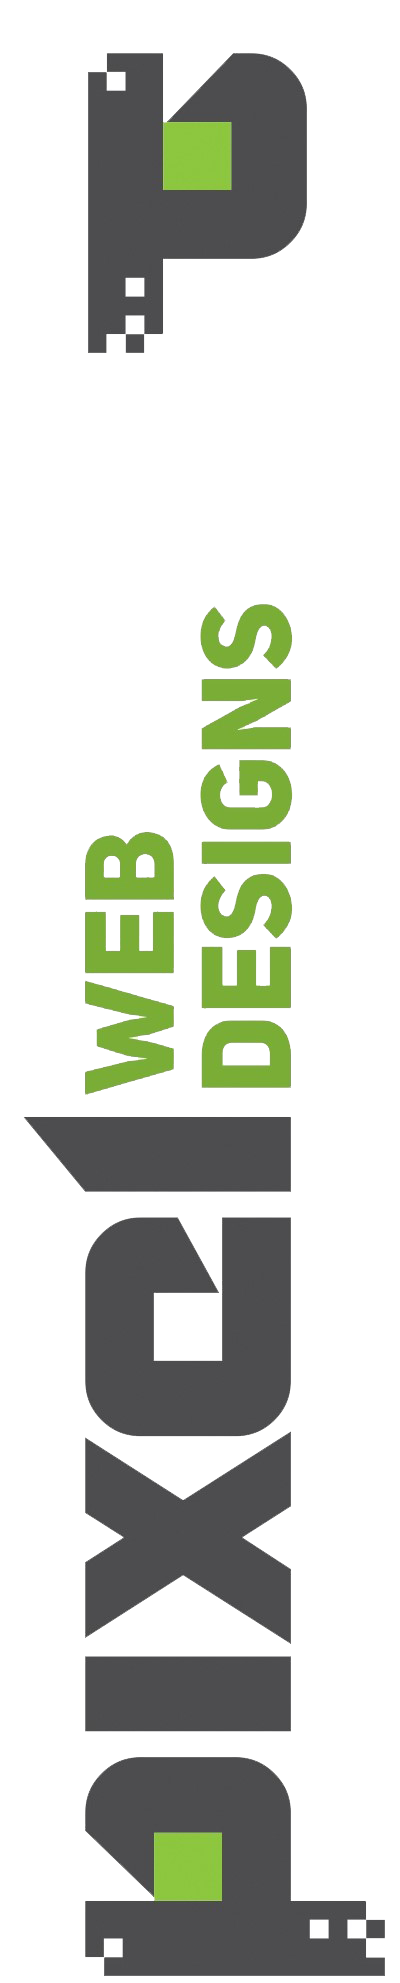 Pixel Web Design